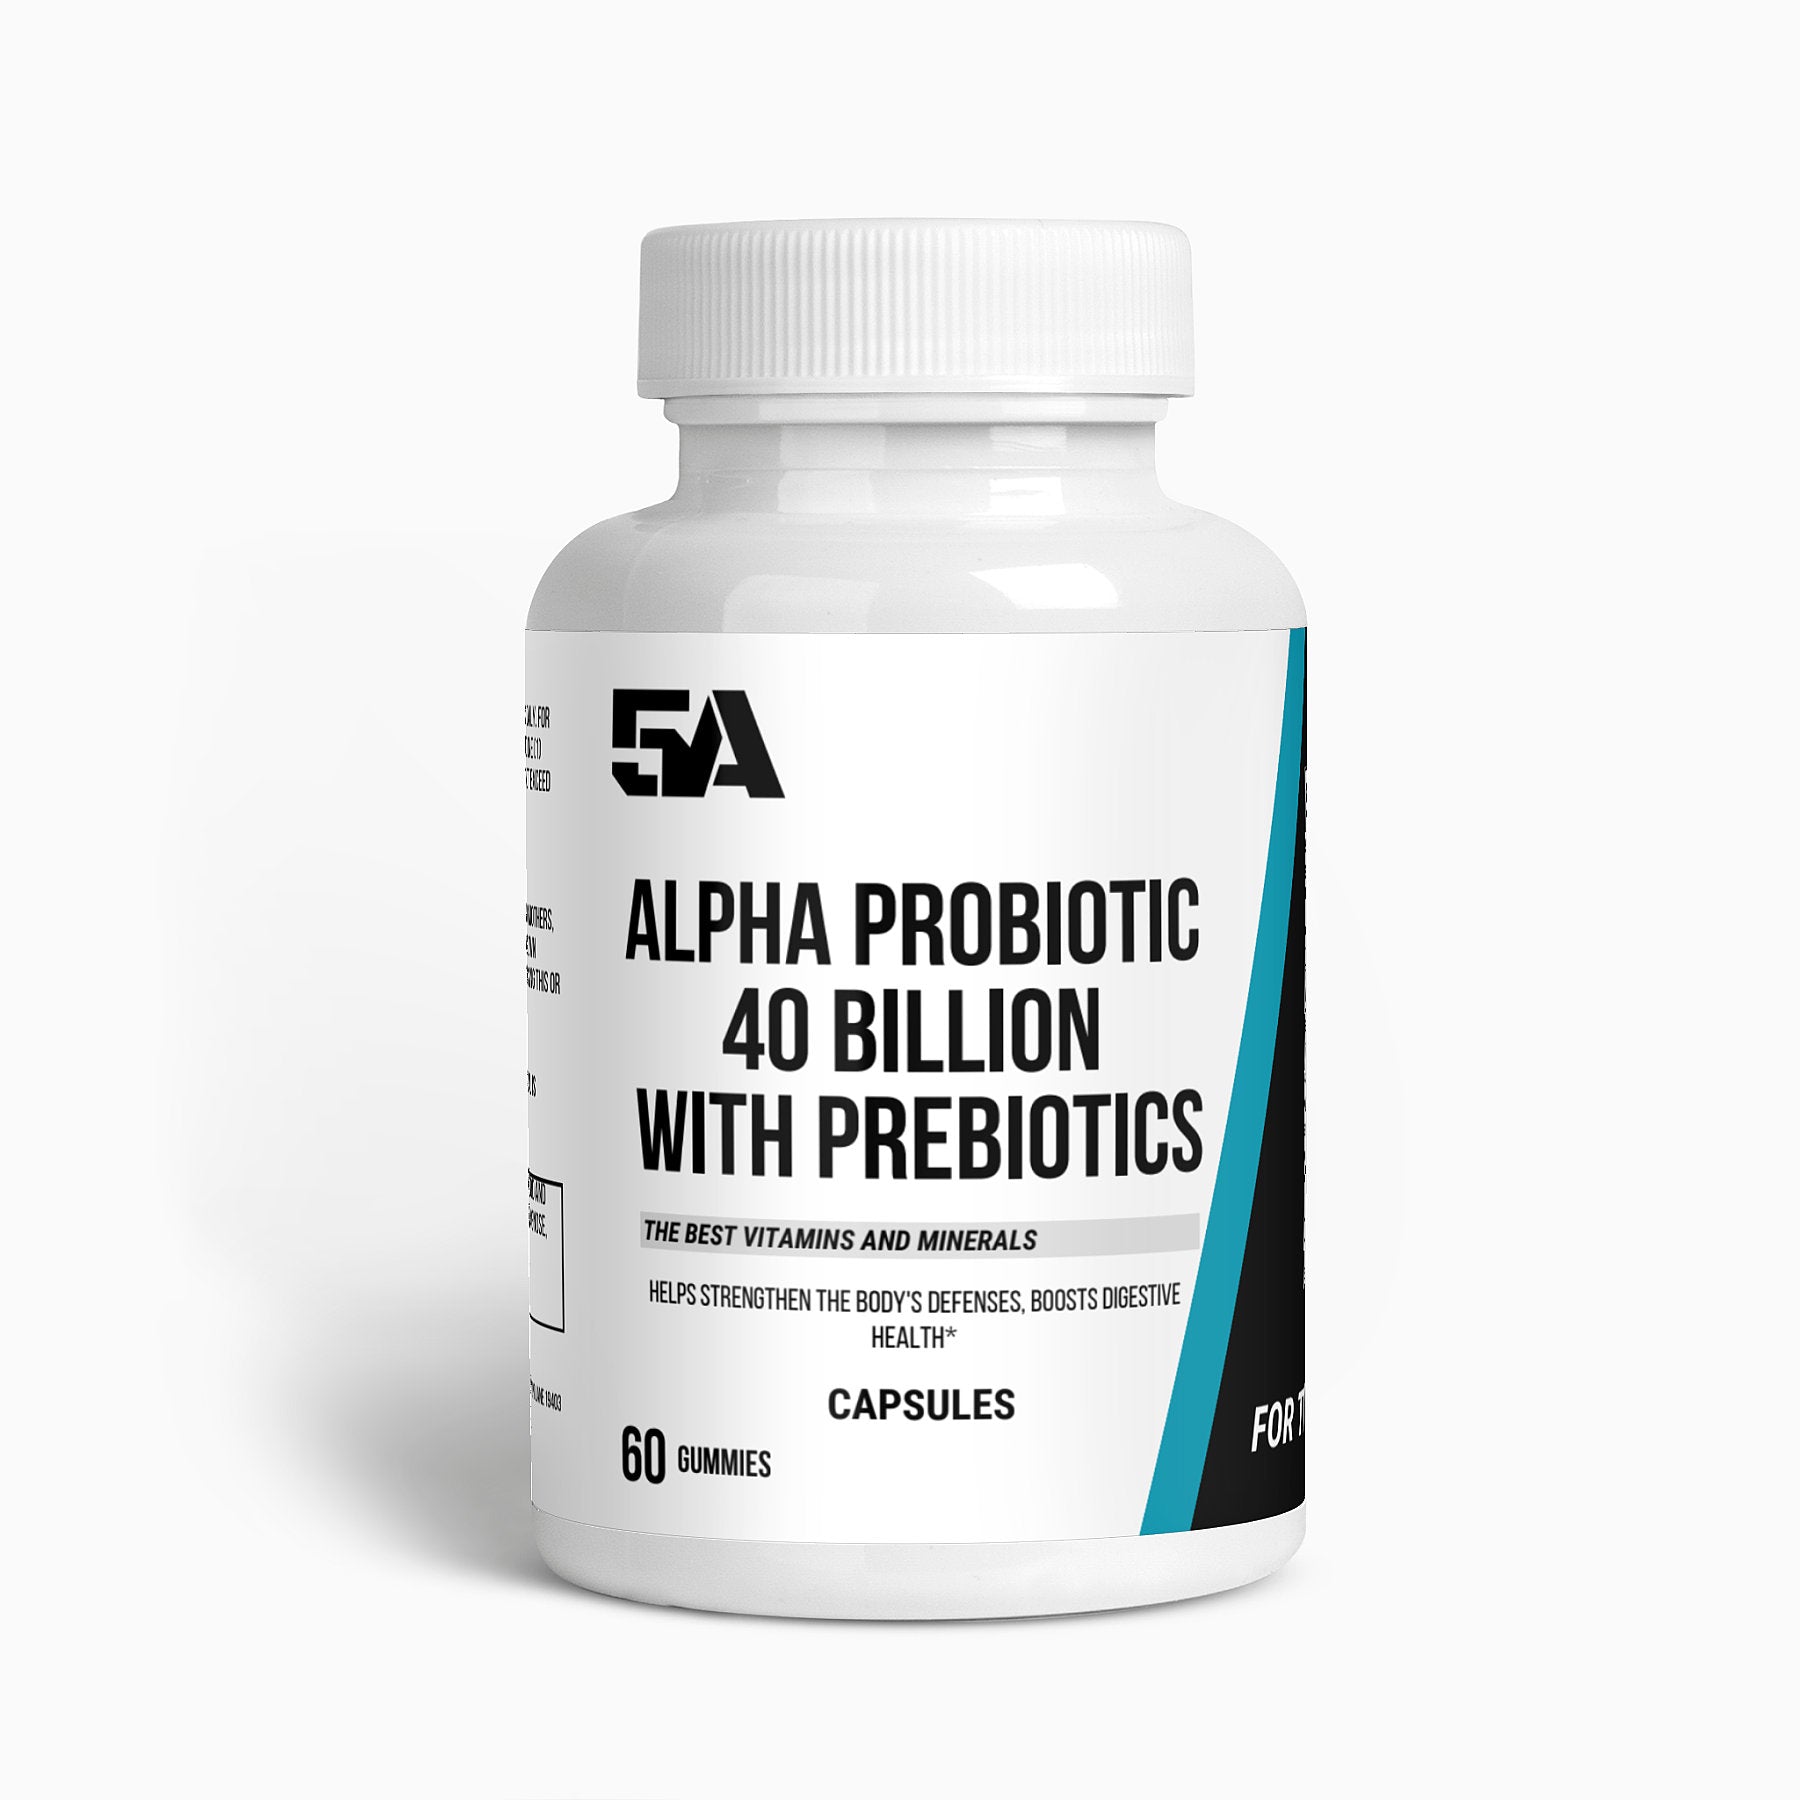 ALPHA Probiotic 40 Billion with Prebiotics